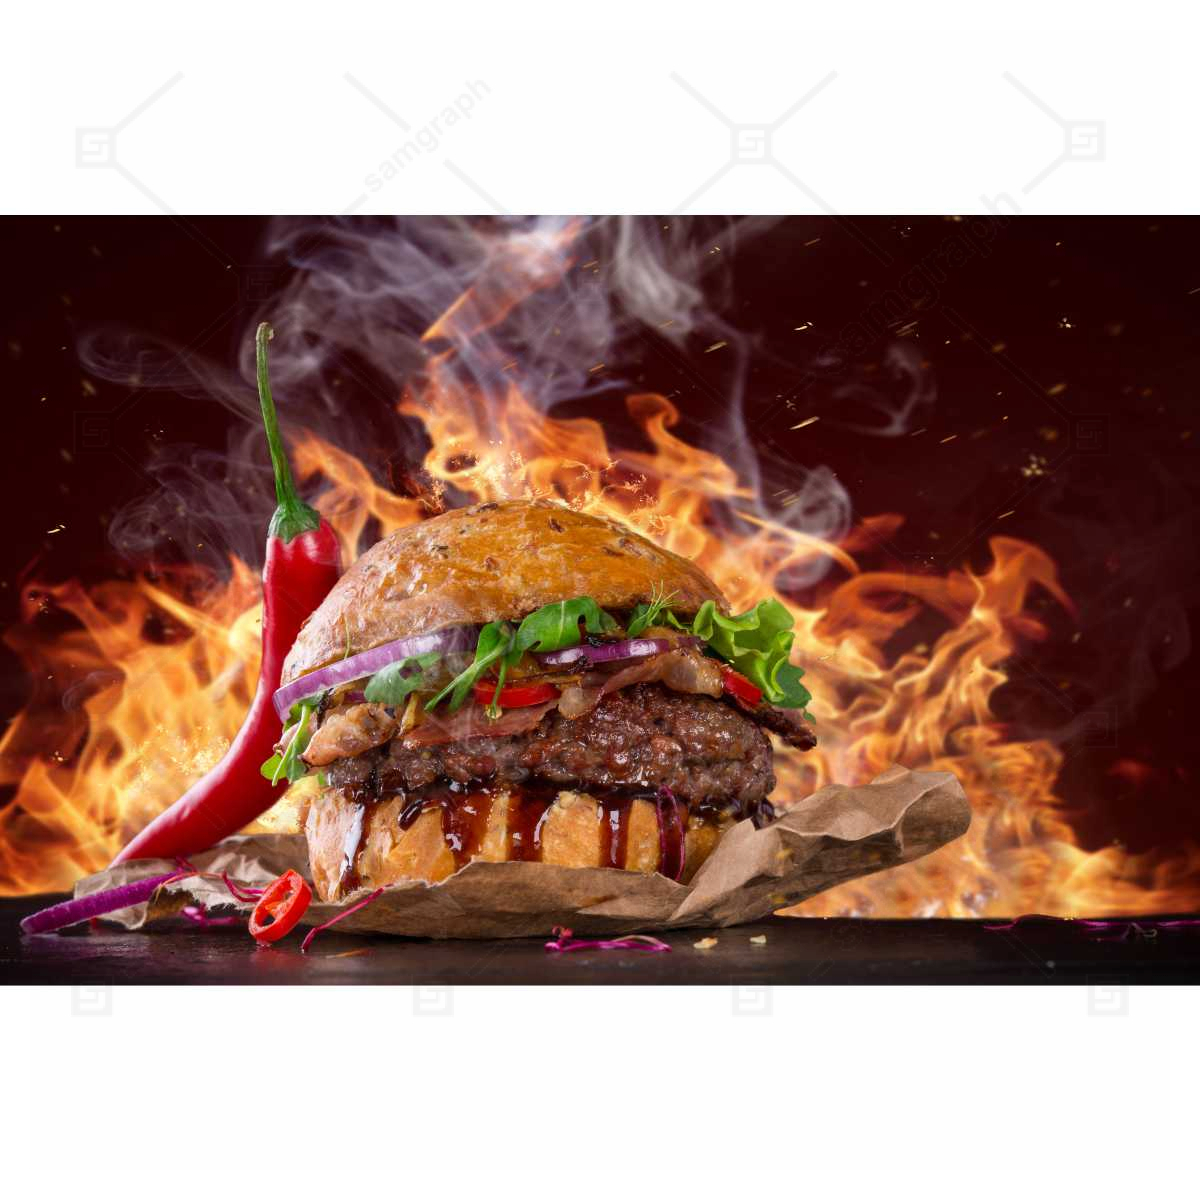 High quality photo of juicy hamburger with fire and pepper lettuce onion parsley 2 1 عکس با کیفیت همبرگر آبدار با زمینه آتش و فلفل کاهو پیاز جعفری تصویر شماره 2